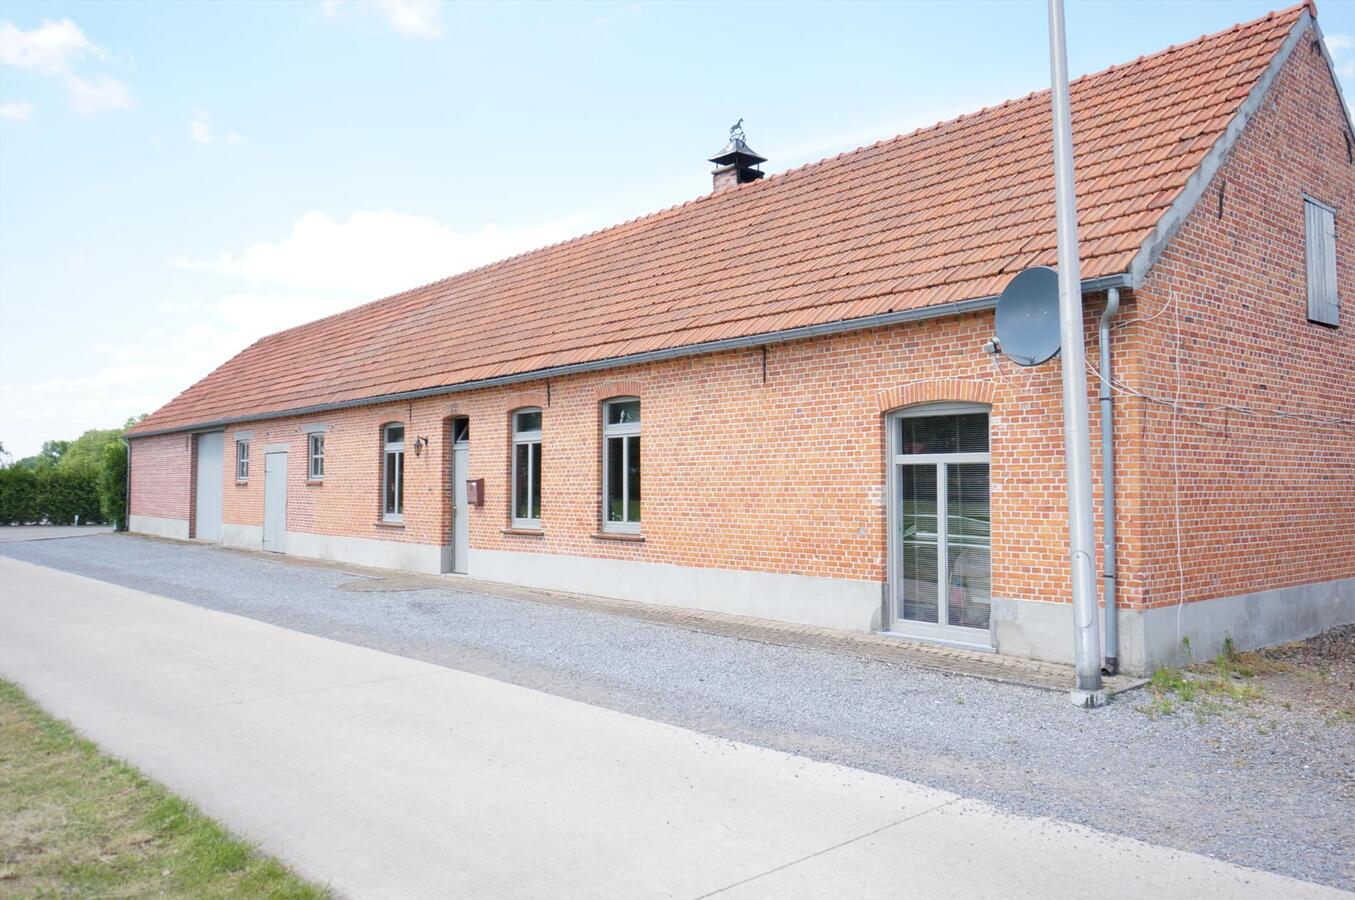 Property sold in Lommel